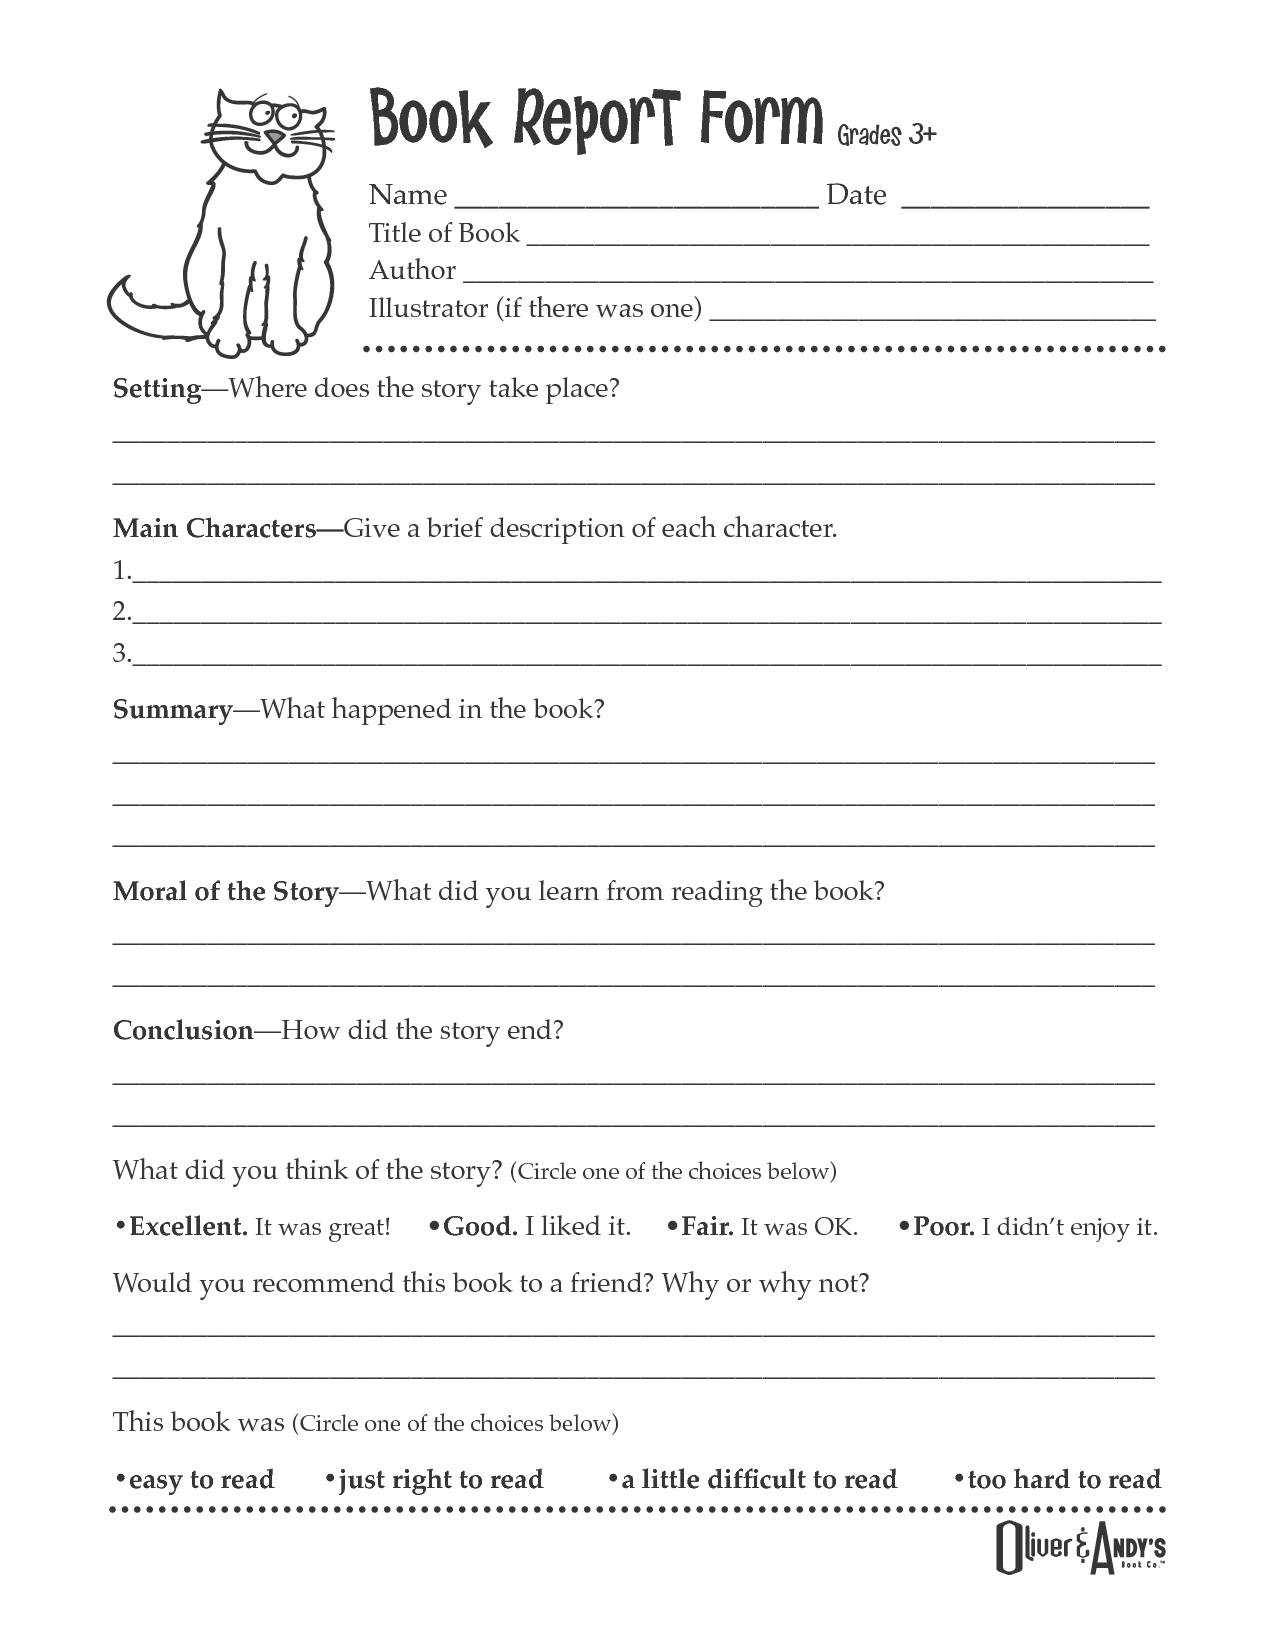 Second Grade Book Report Template | Book Report Form Grades For Book Report Template 4Th Grade